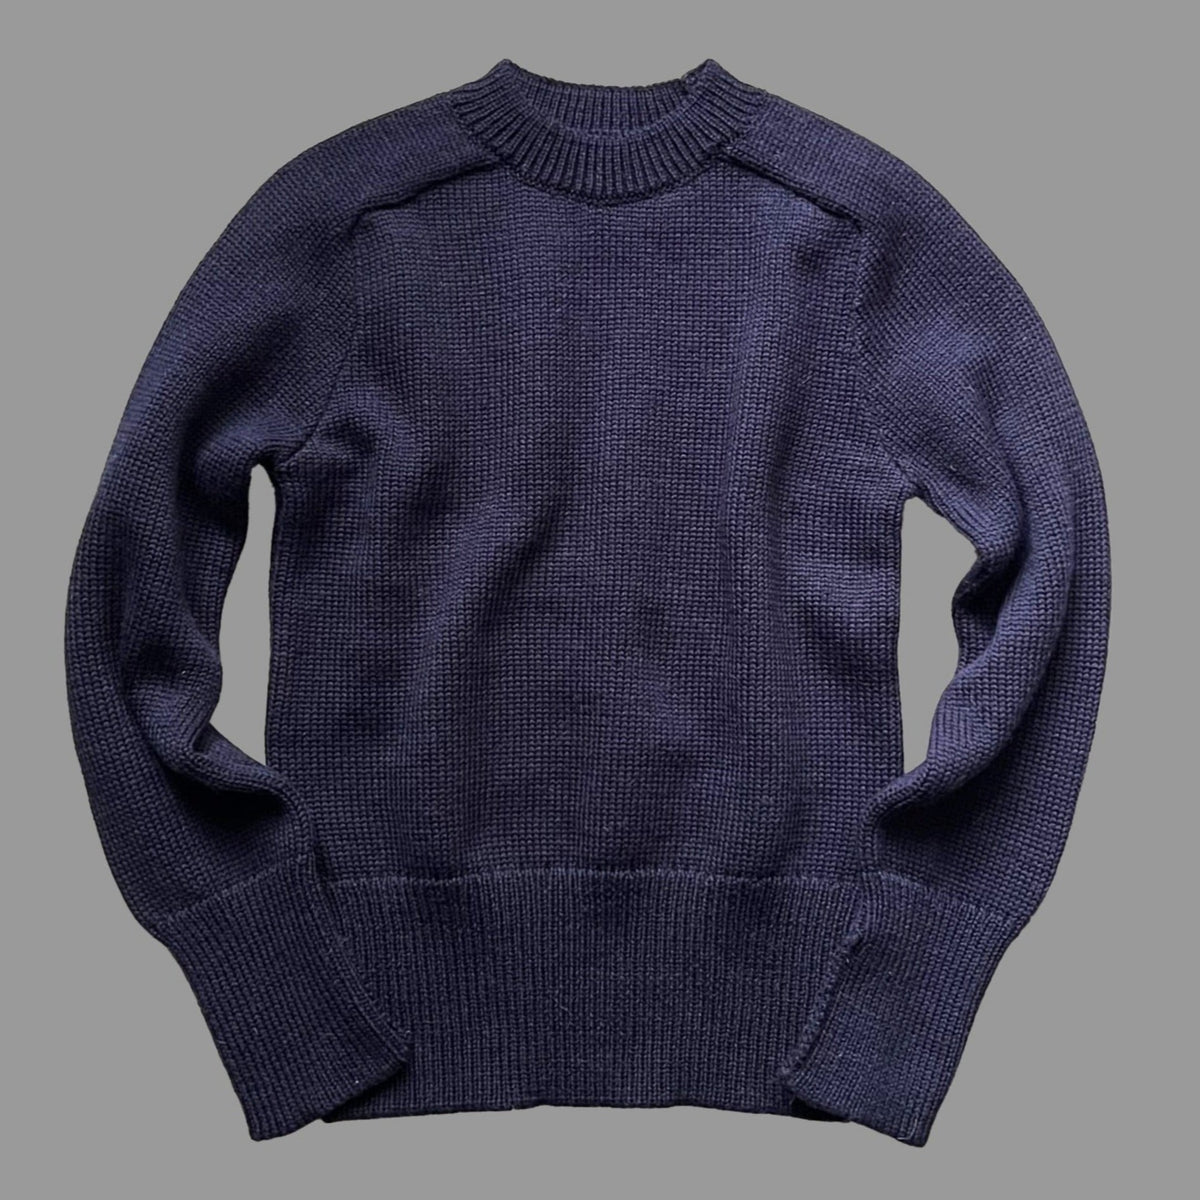 North Sea Clothing - Wool Knitwear